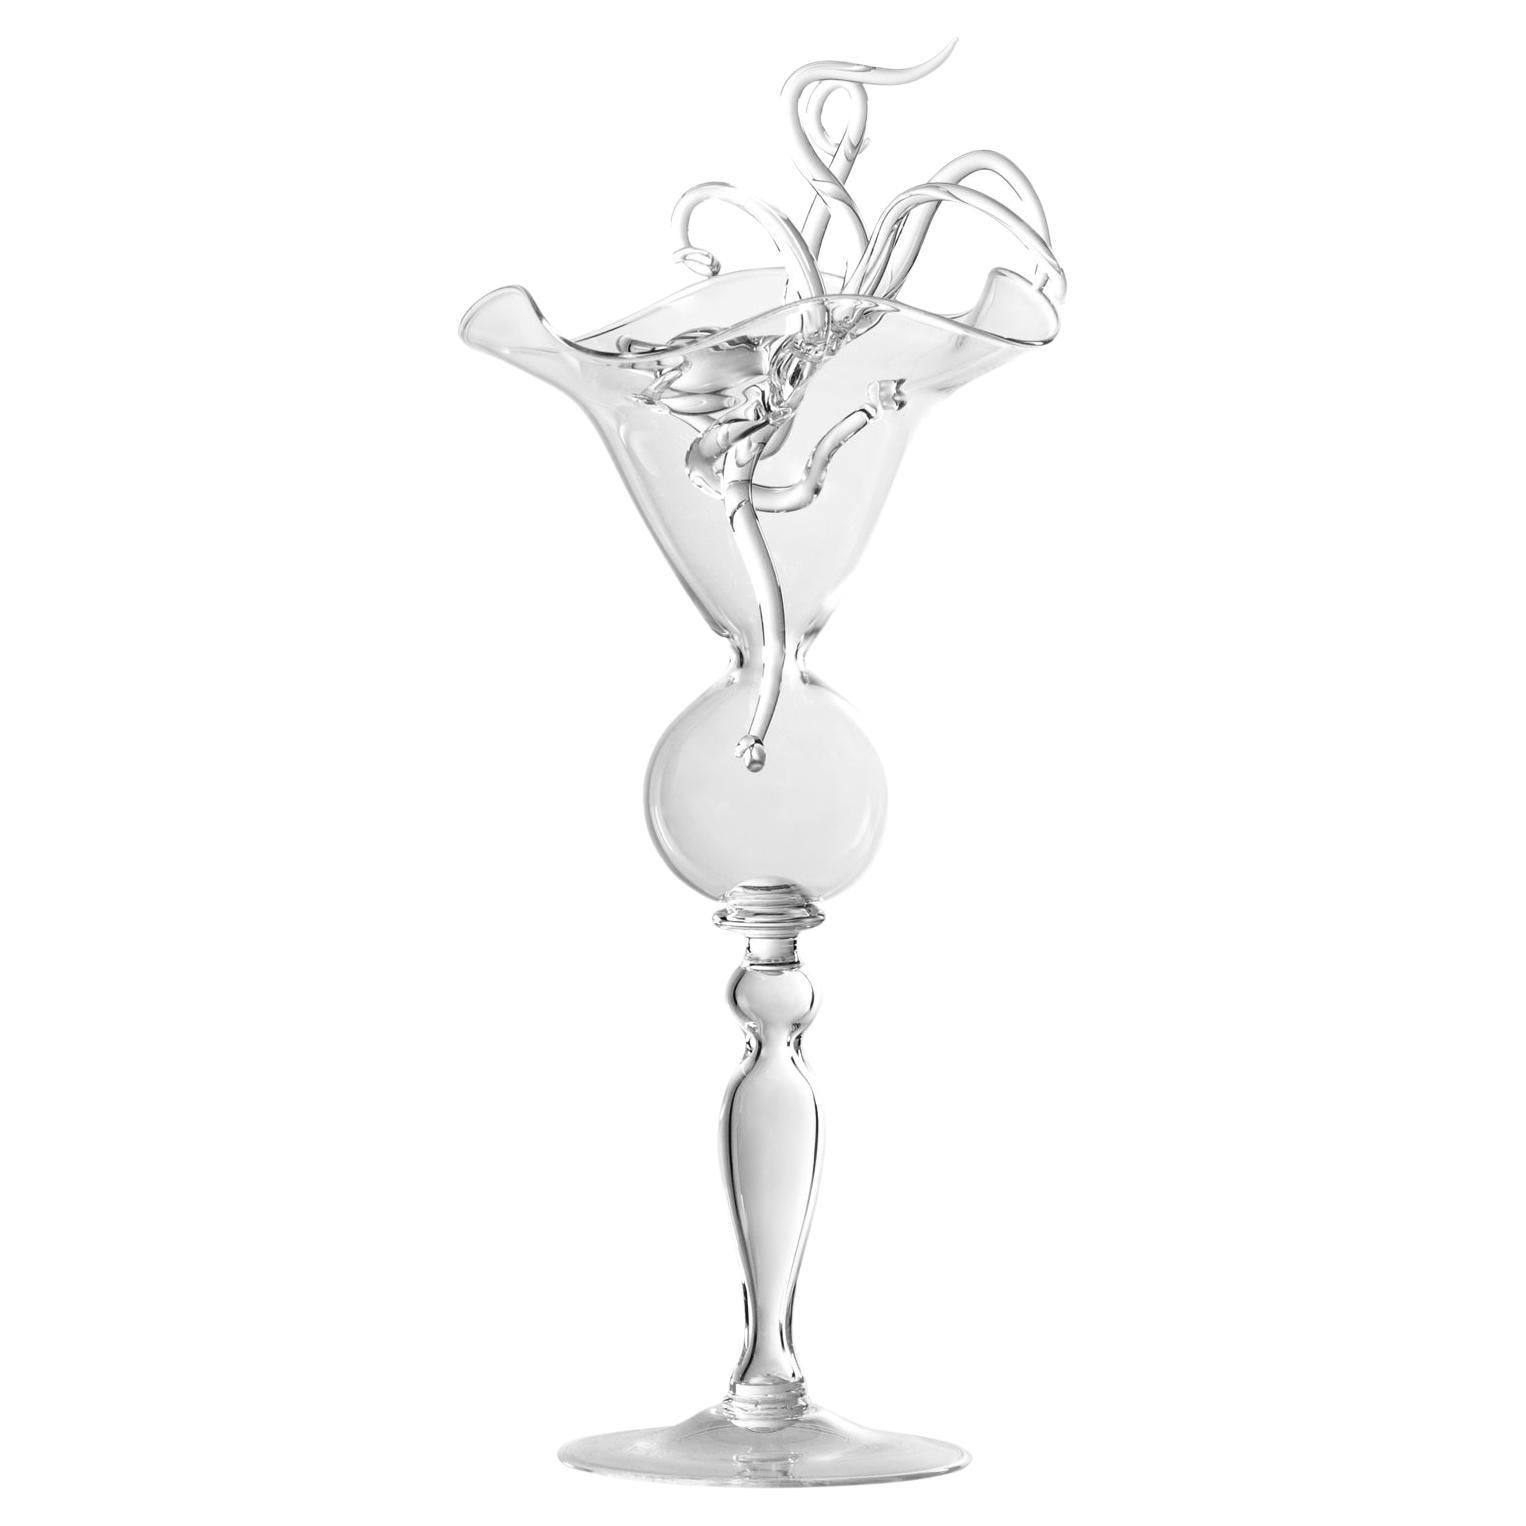 Contemporary Leggerezza Hand-Blown Glass Sculptural Octopus Goblet #02 For Sale